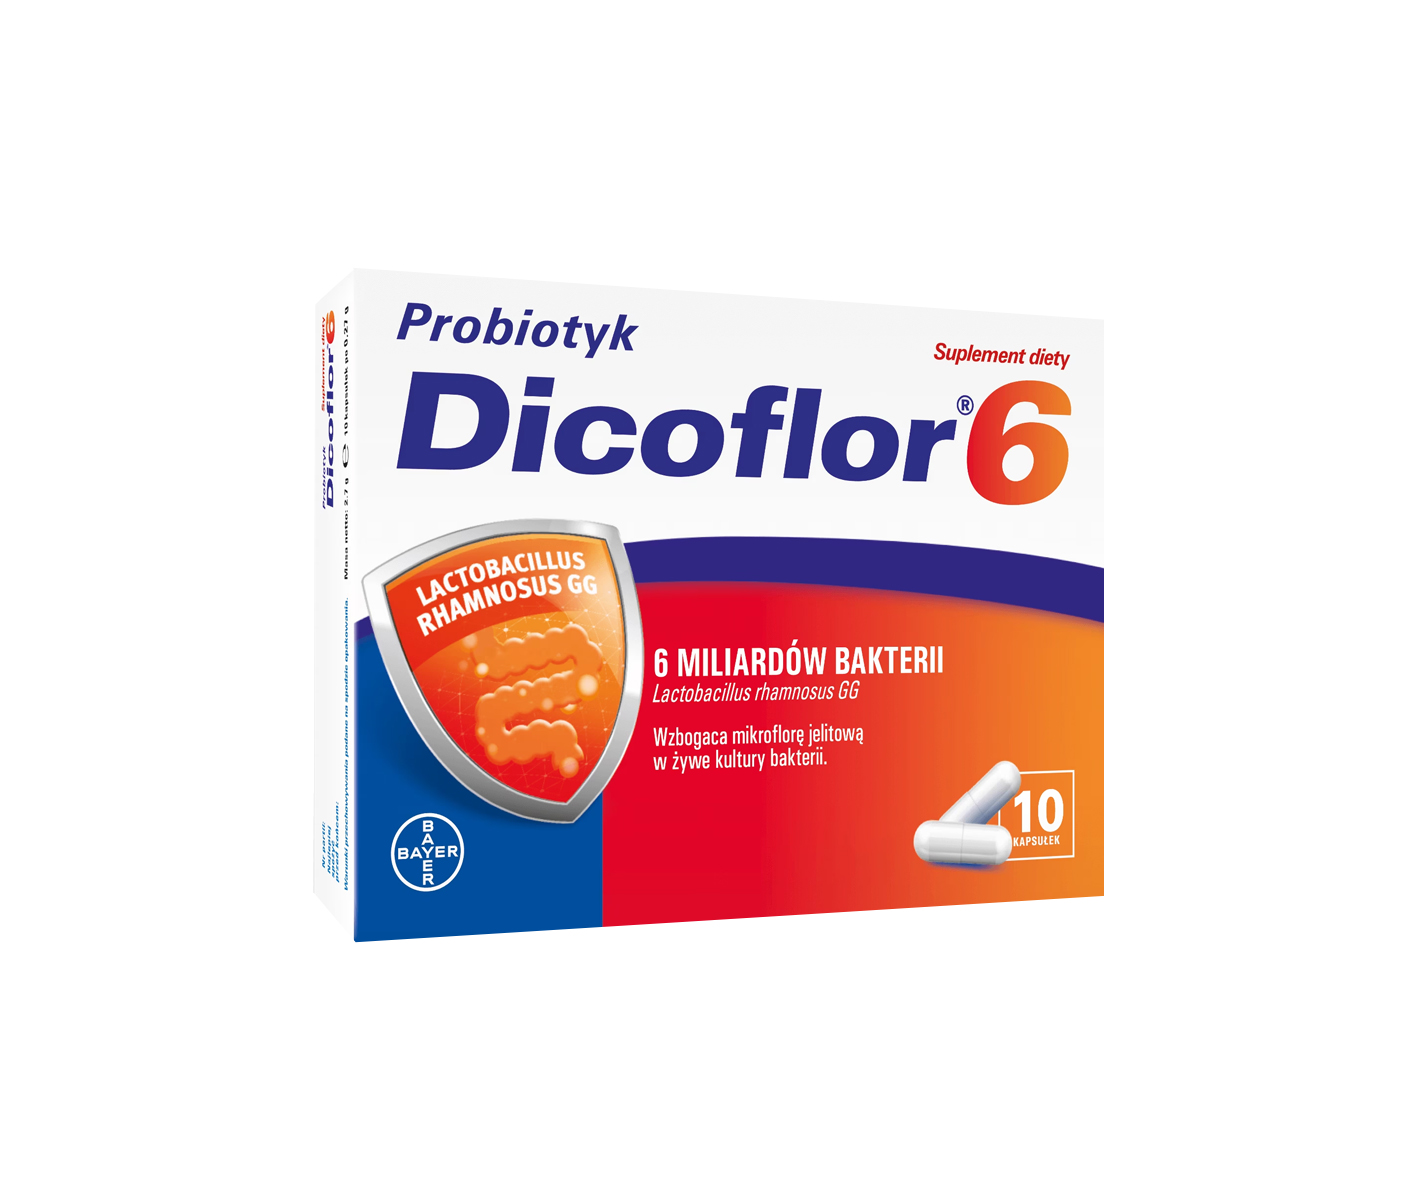 Dicoflor 6, suplemento dietético, probiótico